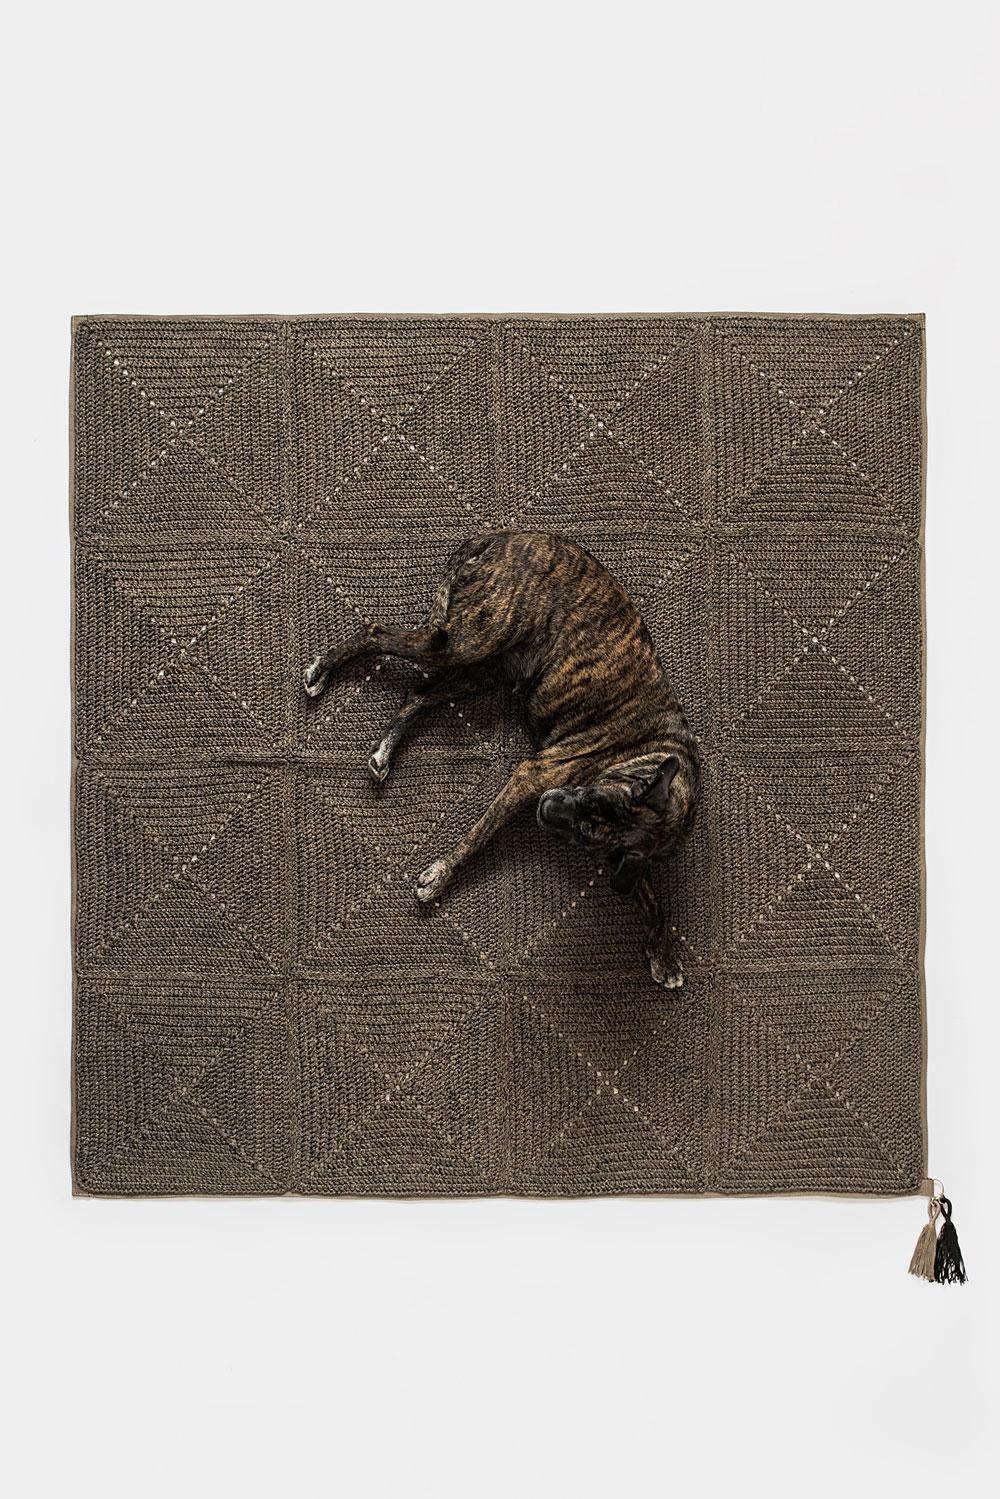 Contemporary 21st Century Asian Brown Black Outdoor Indoor 200x200 cm Handmade Crochet Rug For Sale